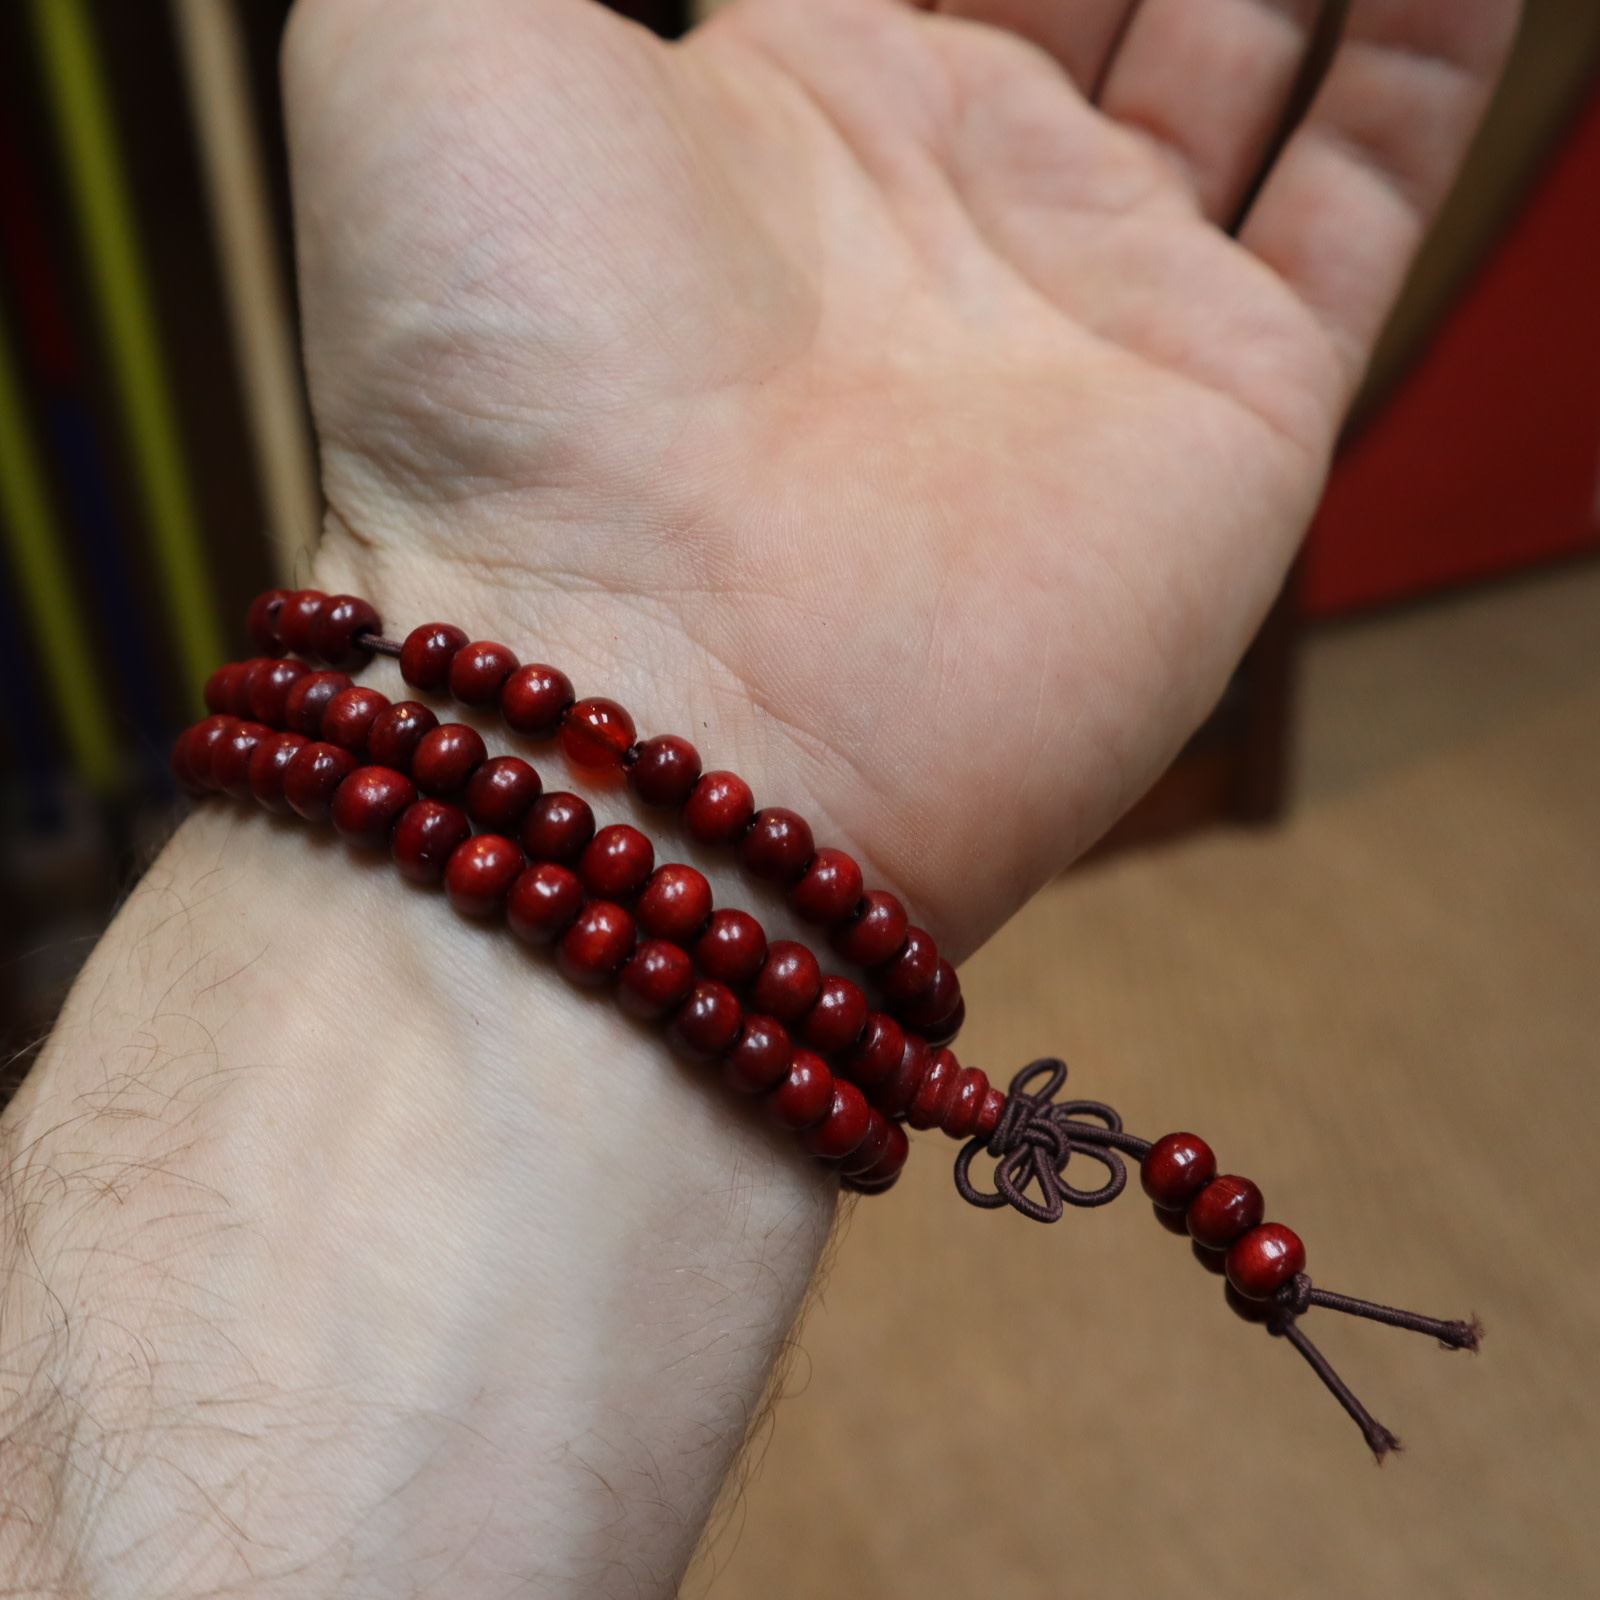 Wood Buddhist Mala Beads Bracelet - Enso Martial Arts Shop Bristol